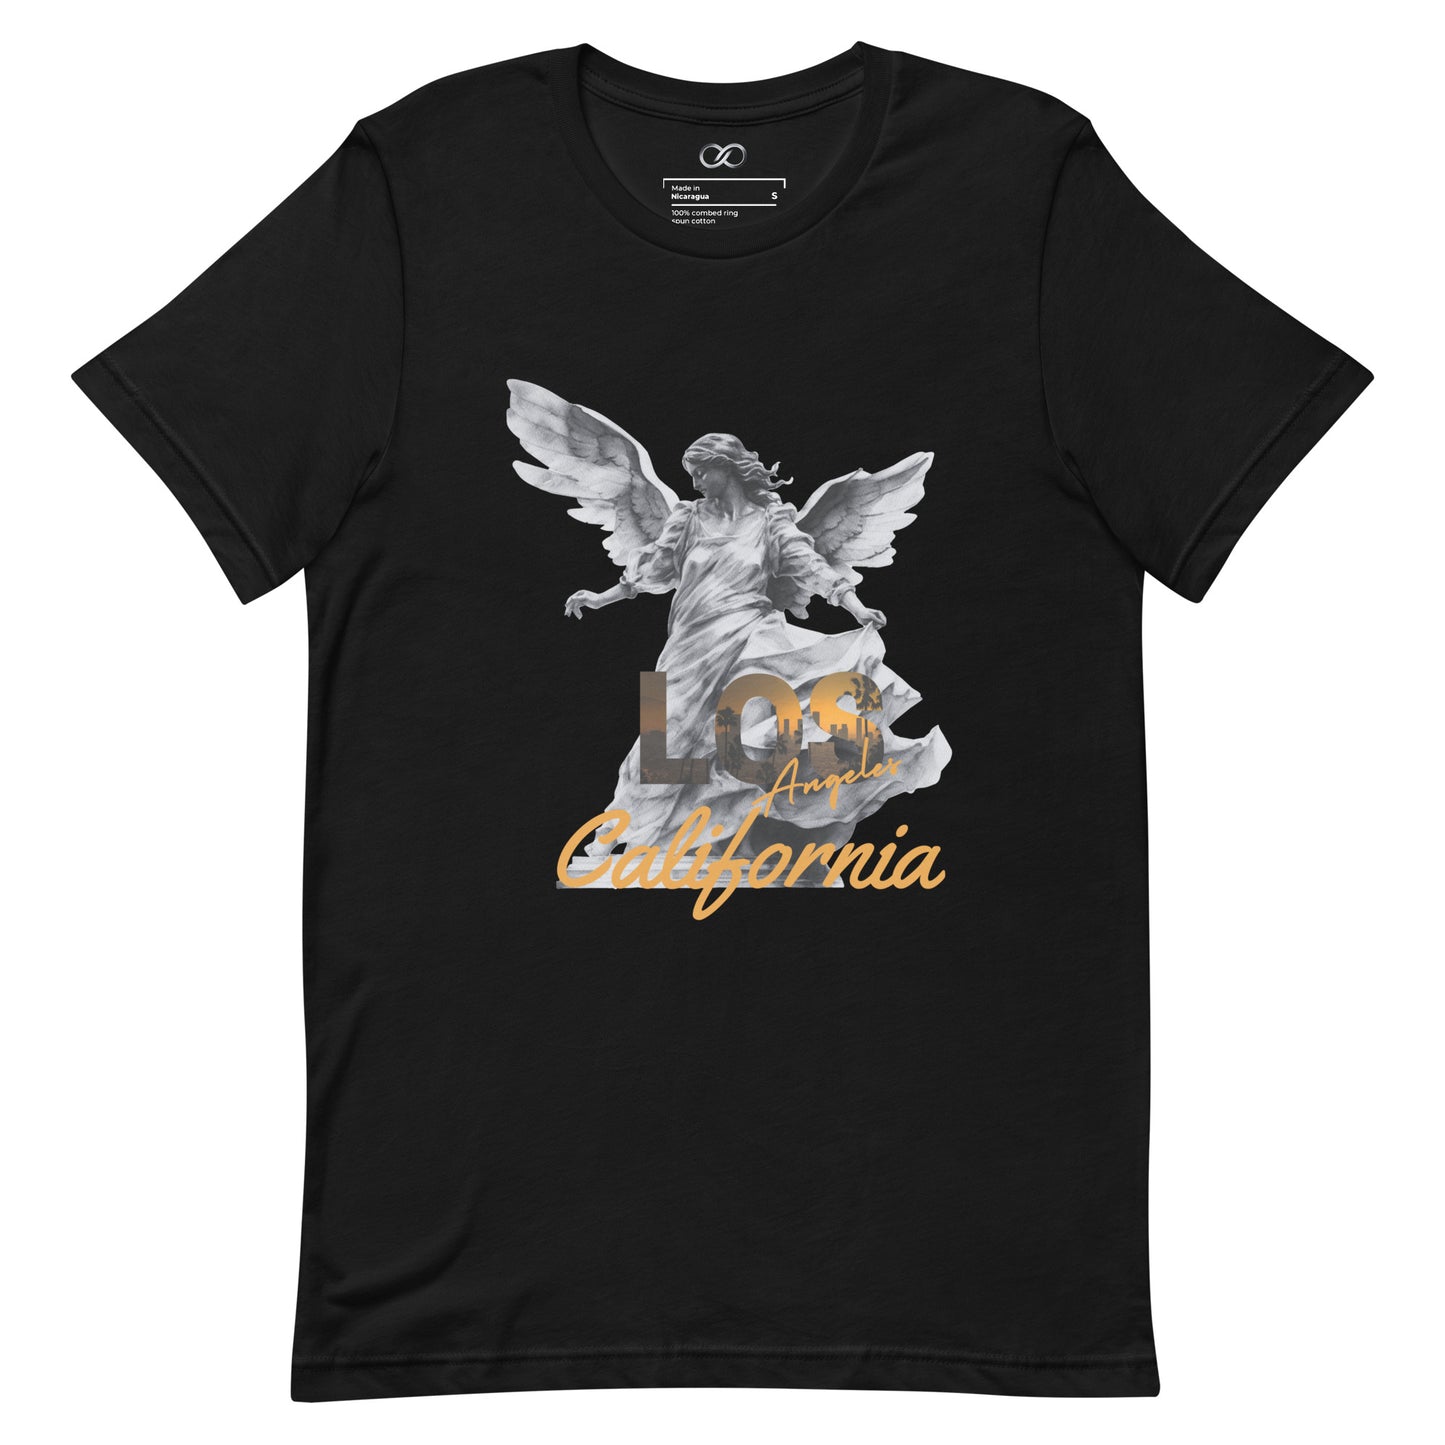 Los Angeles Graphic T-Shirt - LA Streetwear Print Tee